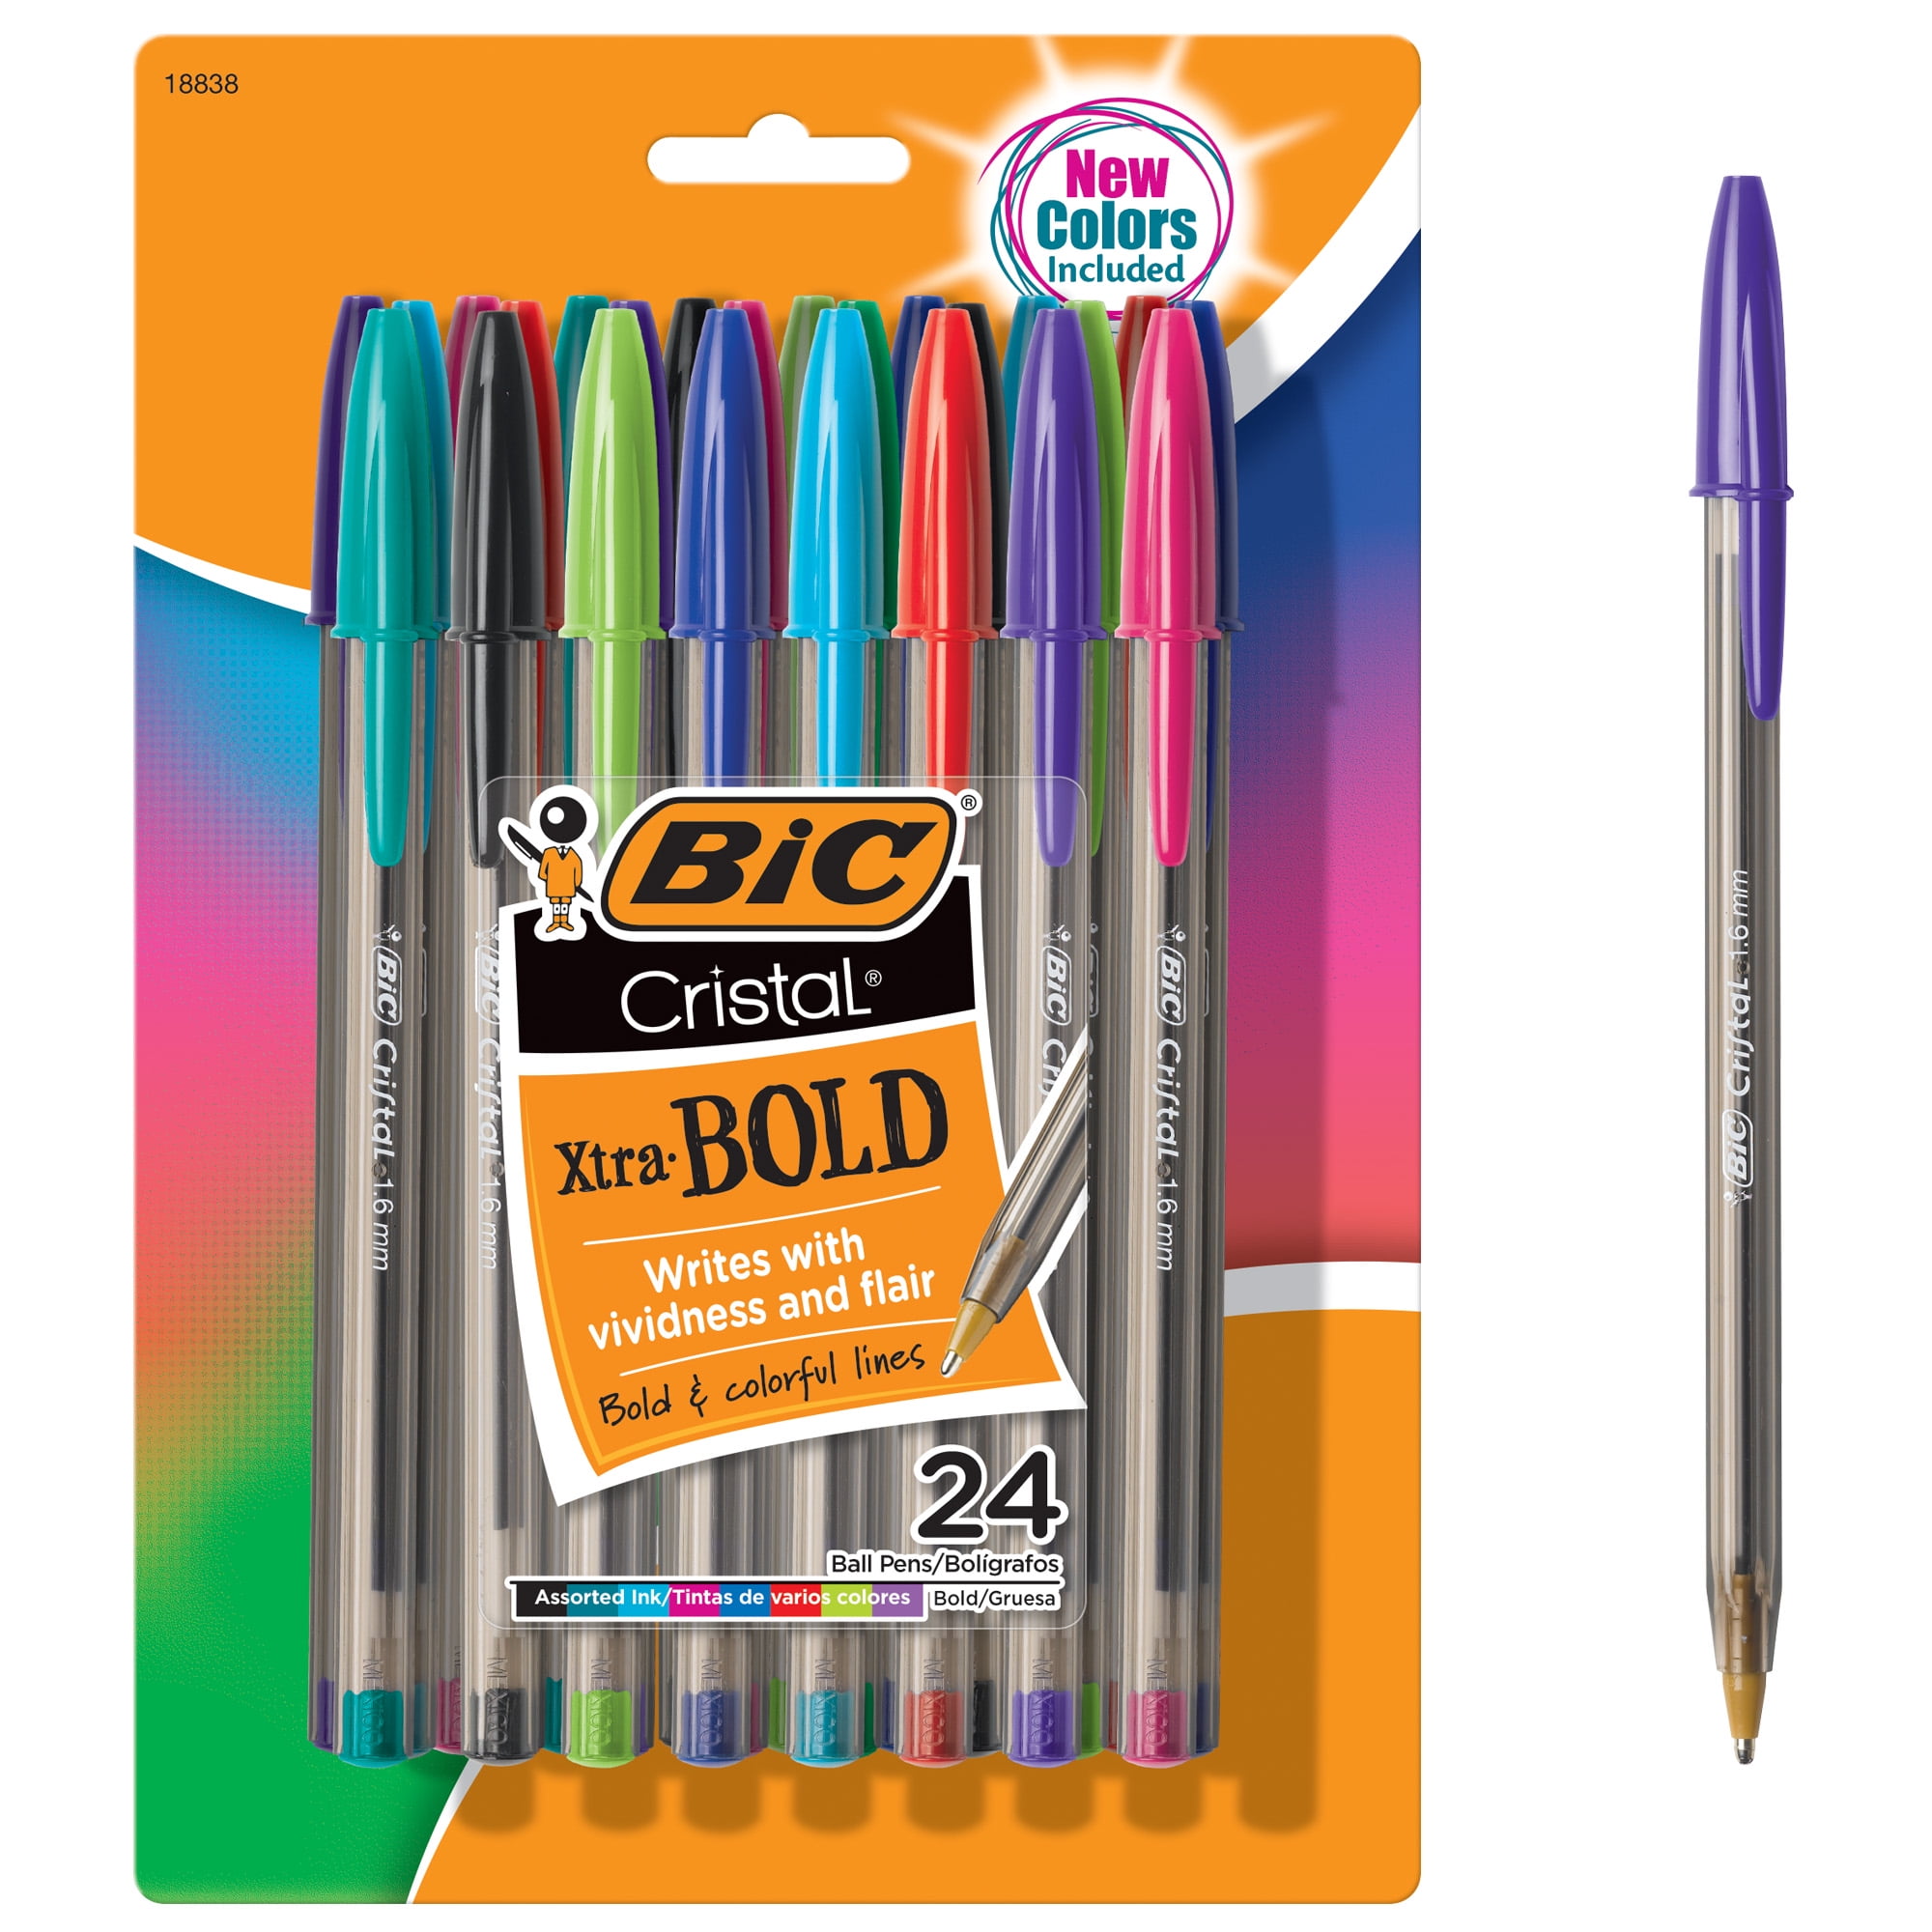 Set of 8 pcs Ballpoint Pen Medium Point Assorted Ink Colors School Office Supply 